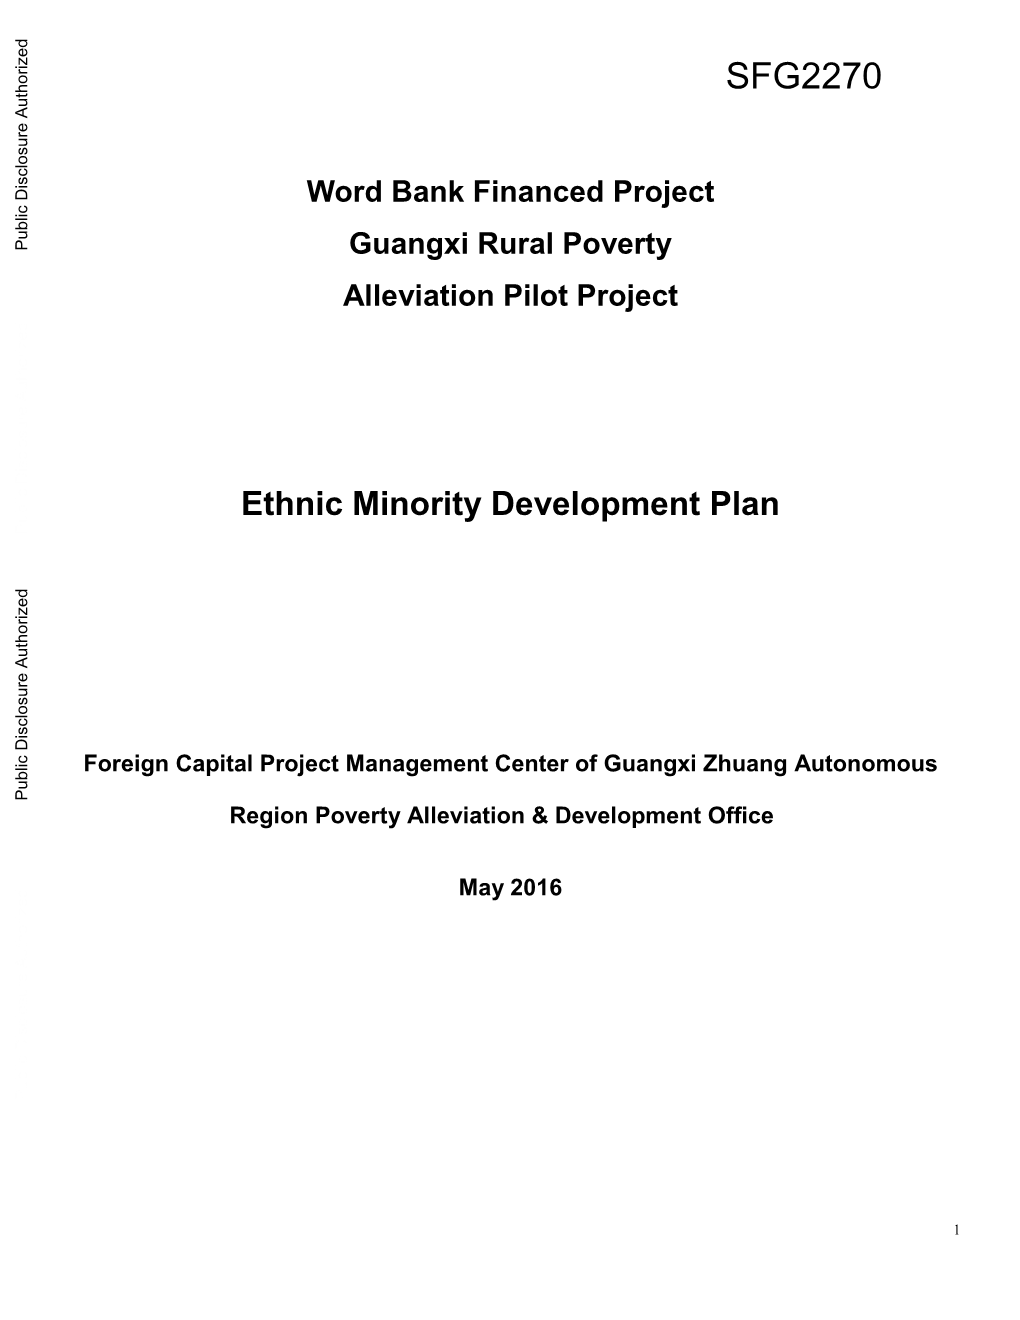 Word Bank Financed Project Guangxi Rural